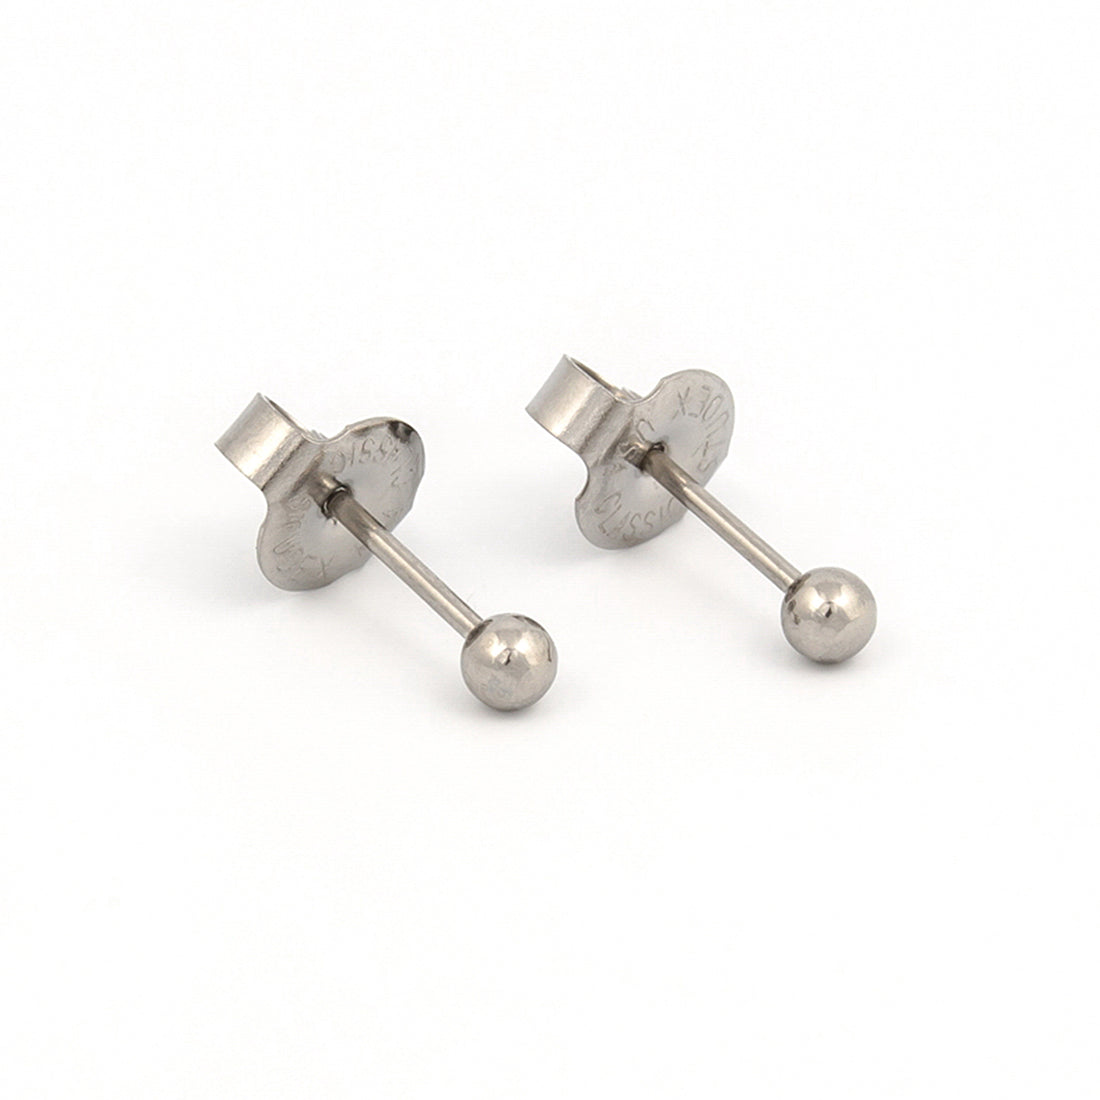 4MM Ball Allergy Free Stainless Steel Piercing Ear Stud